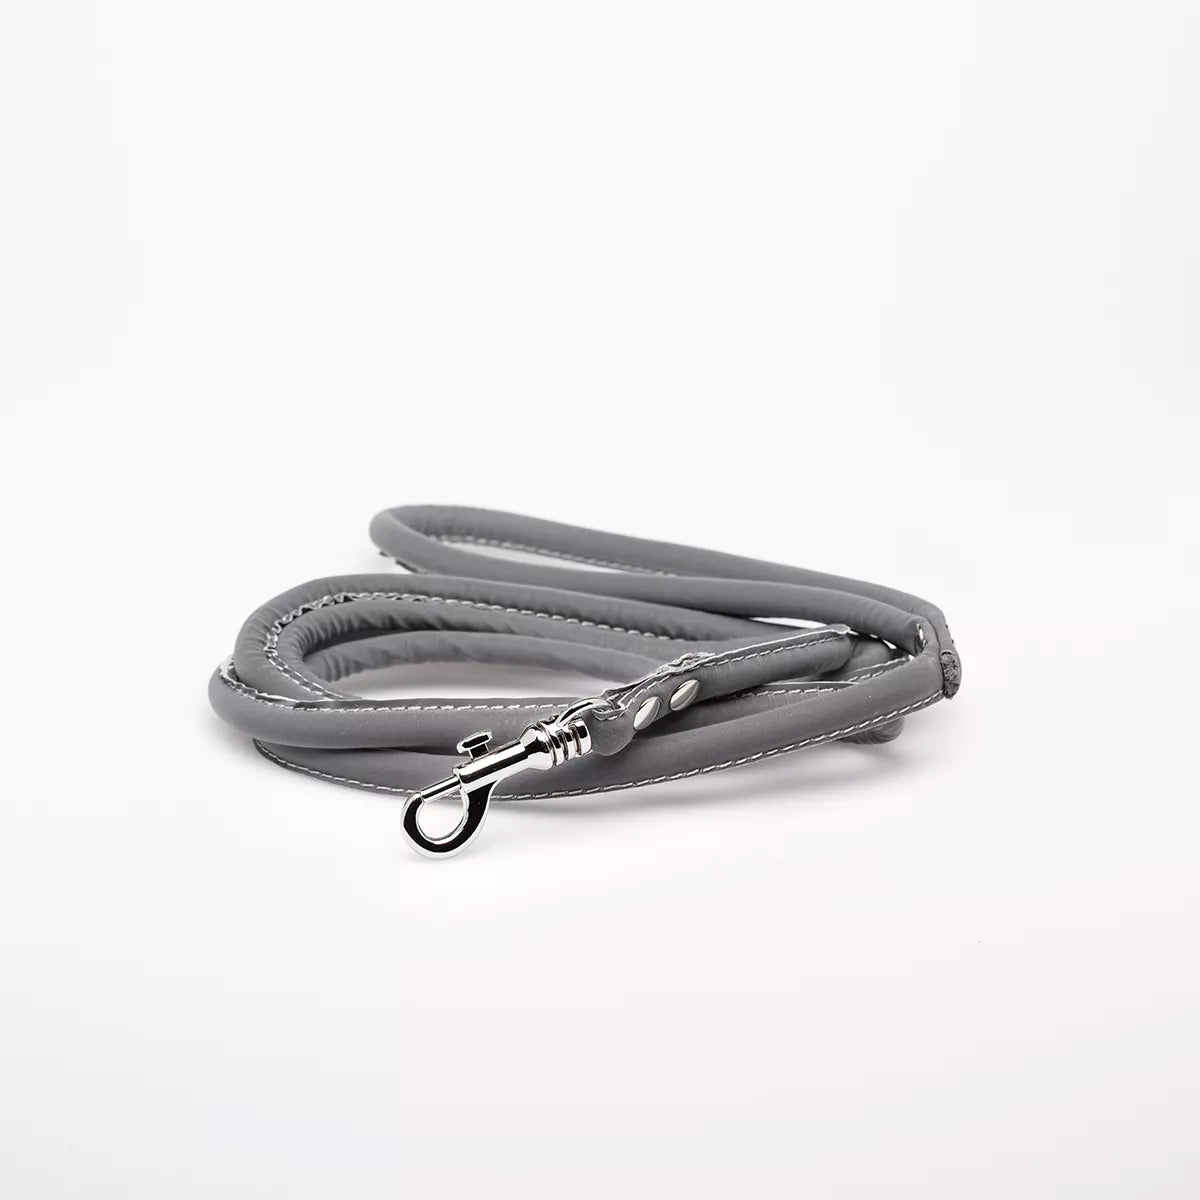 Gray reflective vegan leather leash